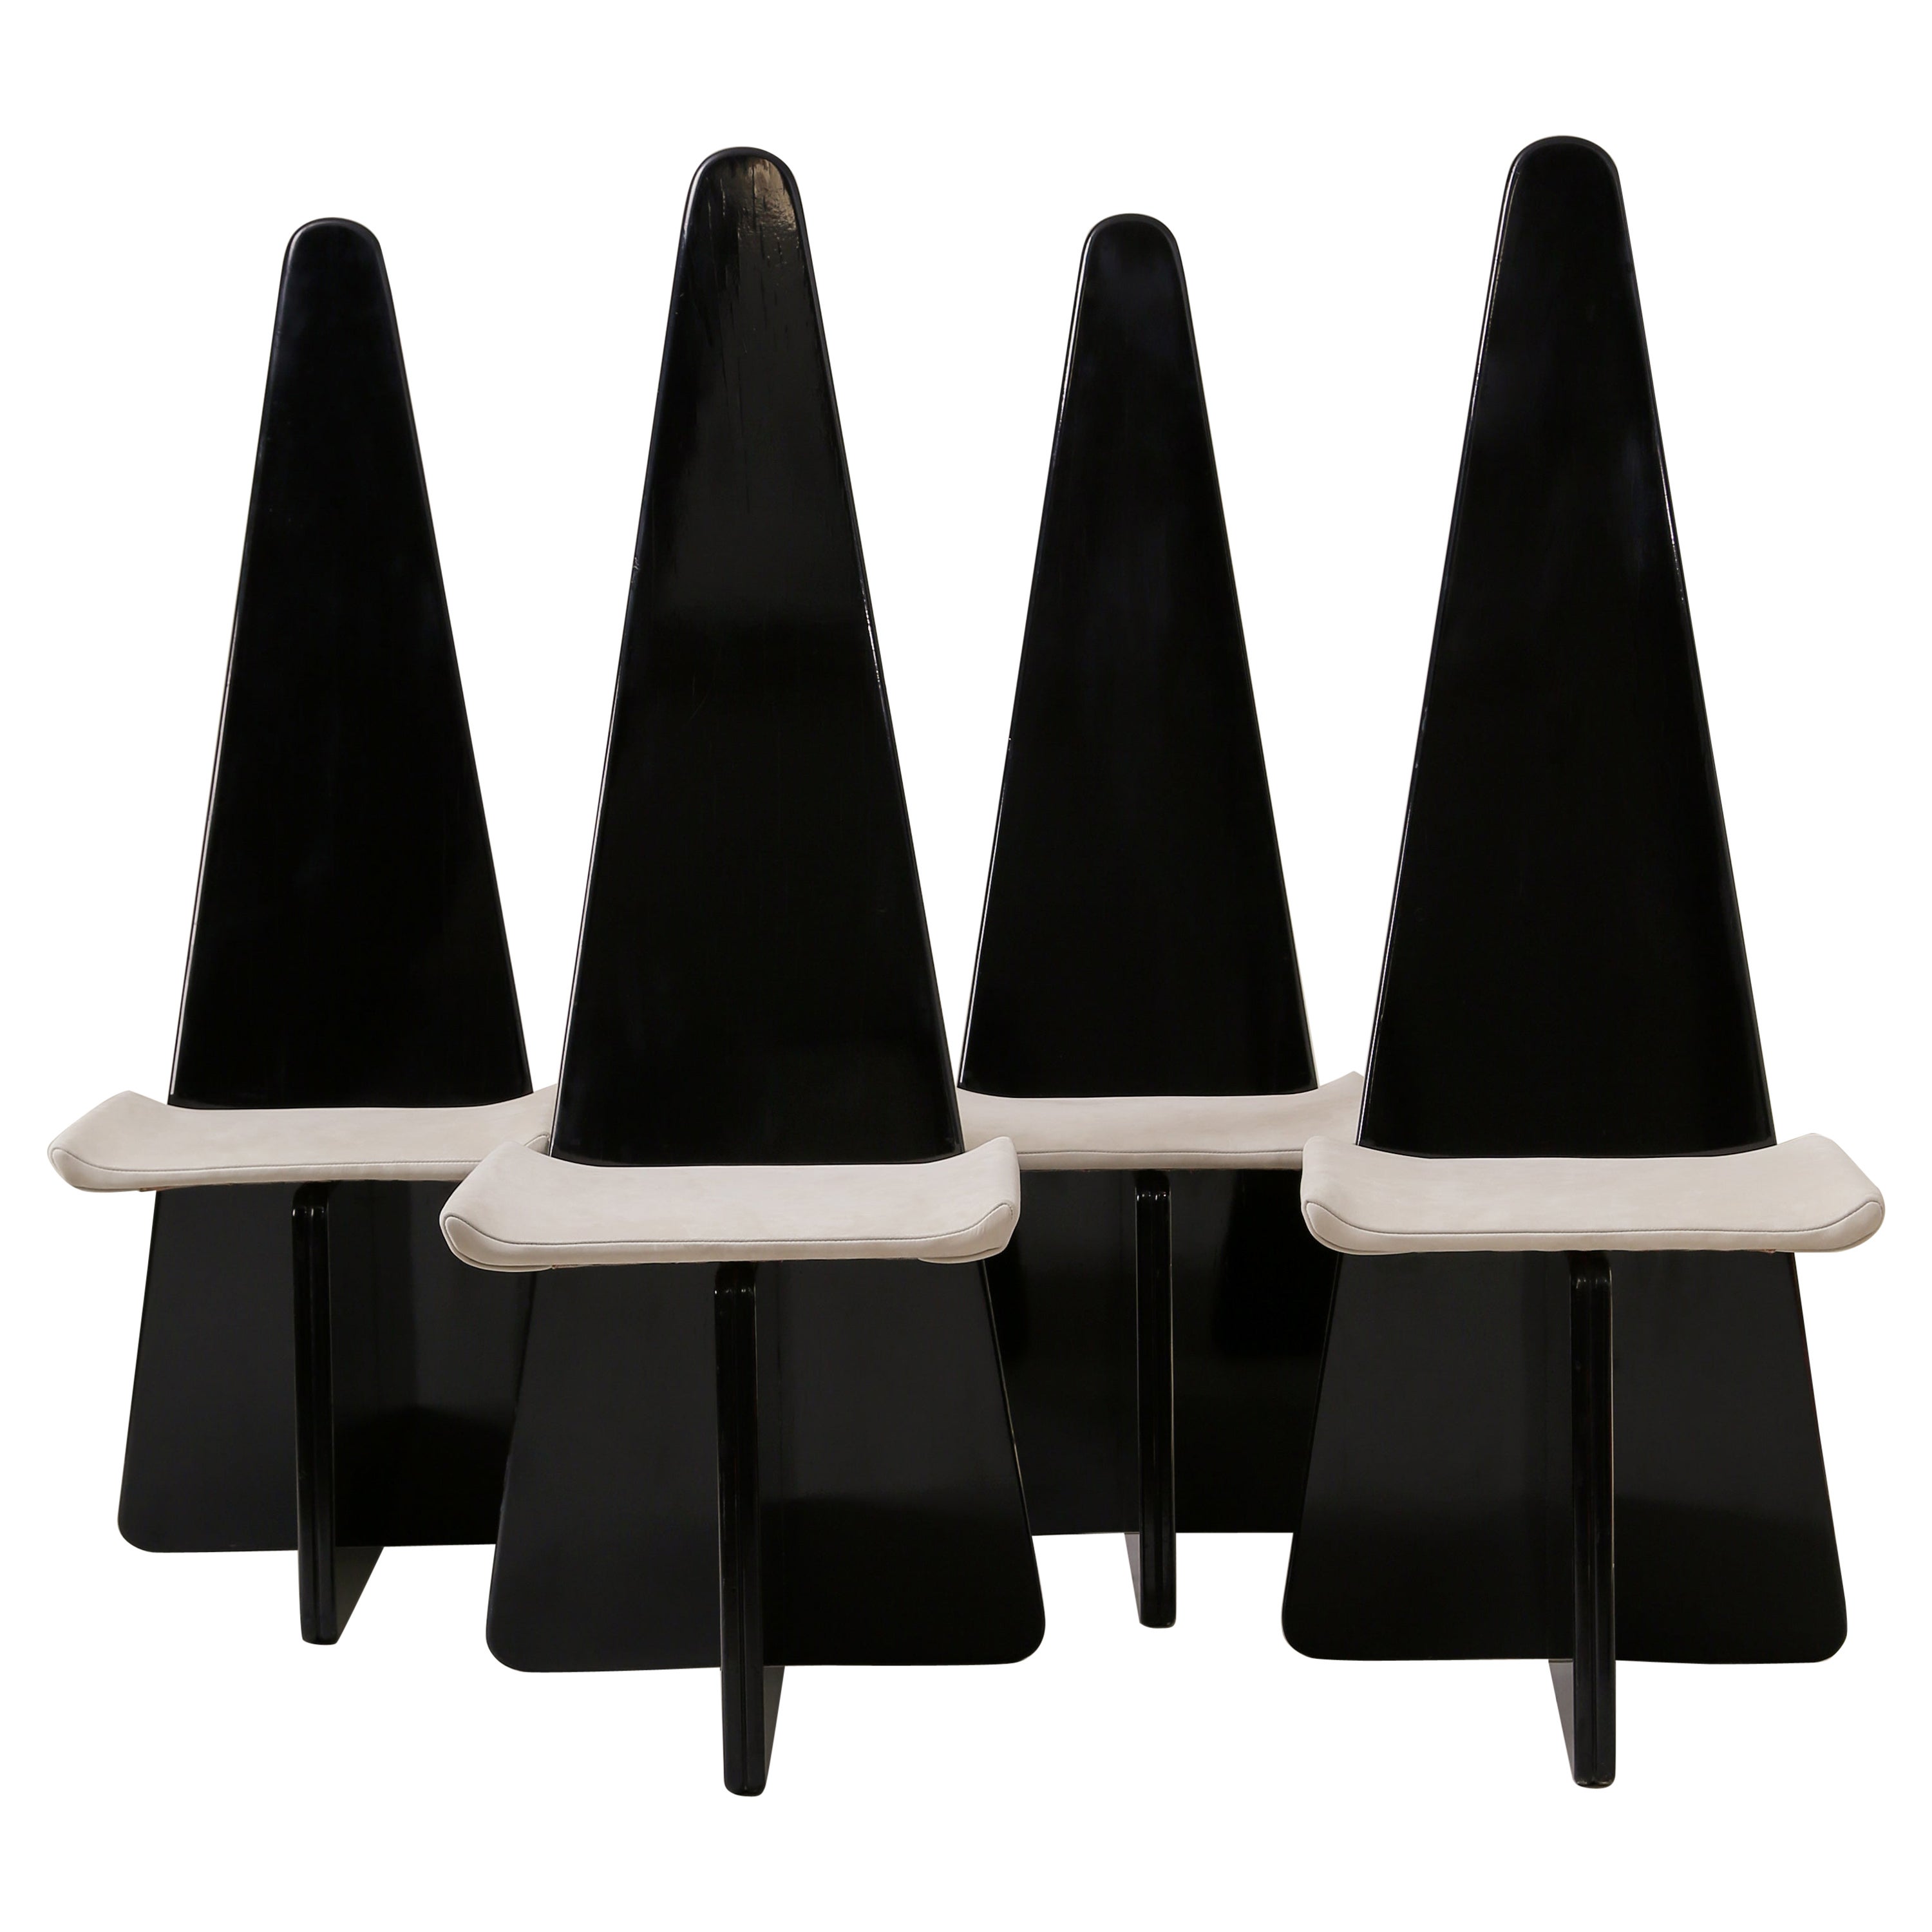 Modernist Triangular Dining Chair, Set of 4